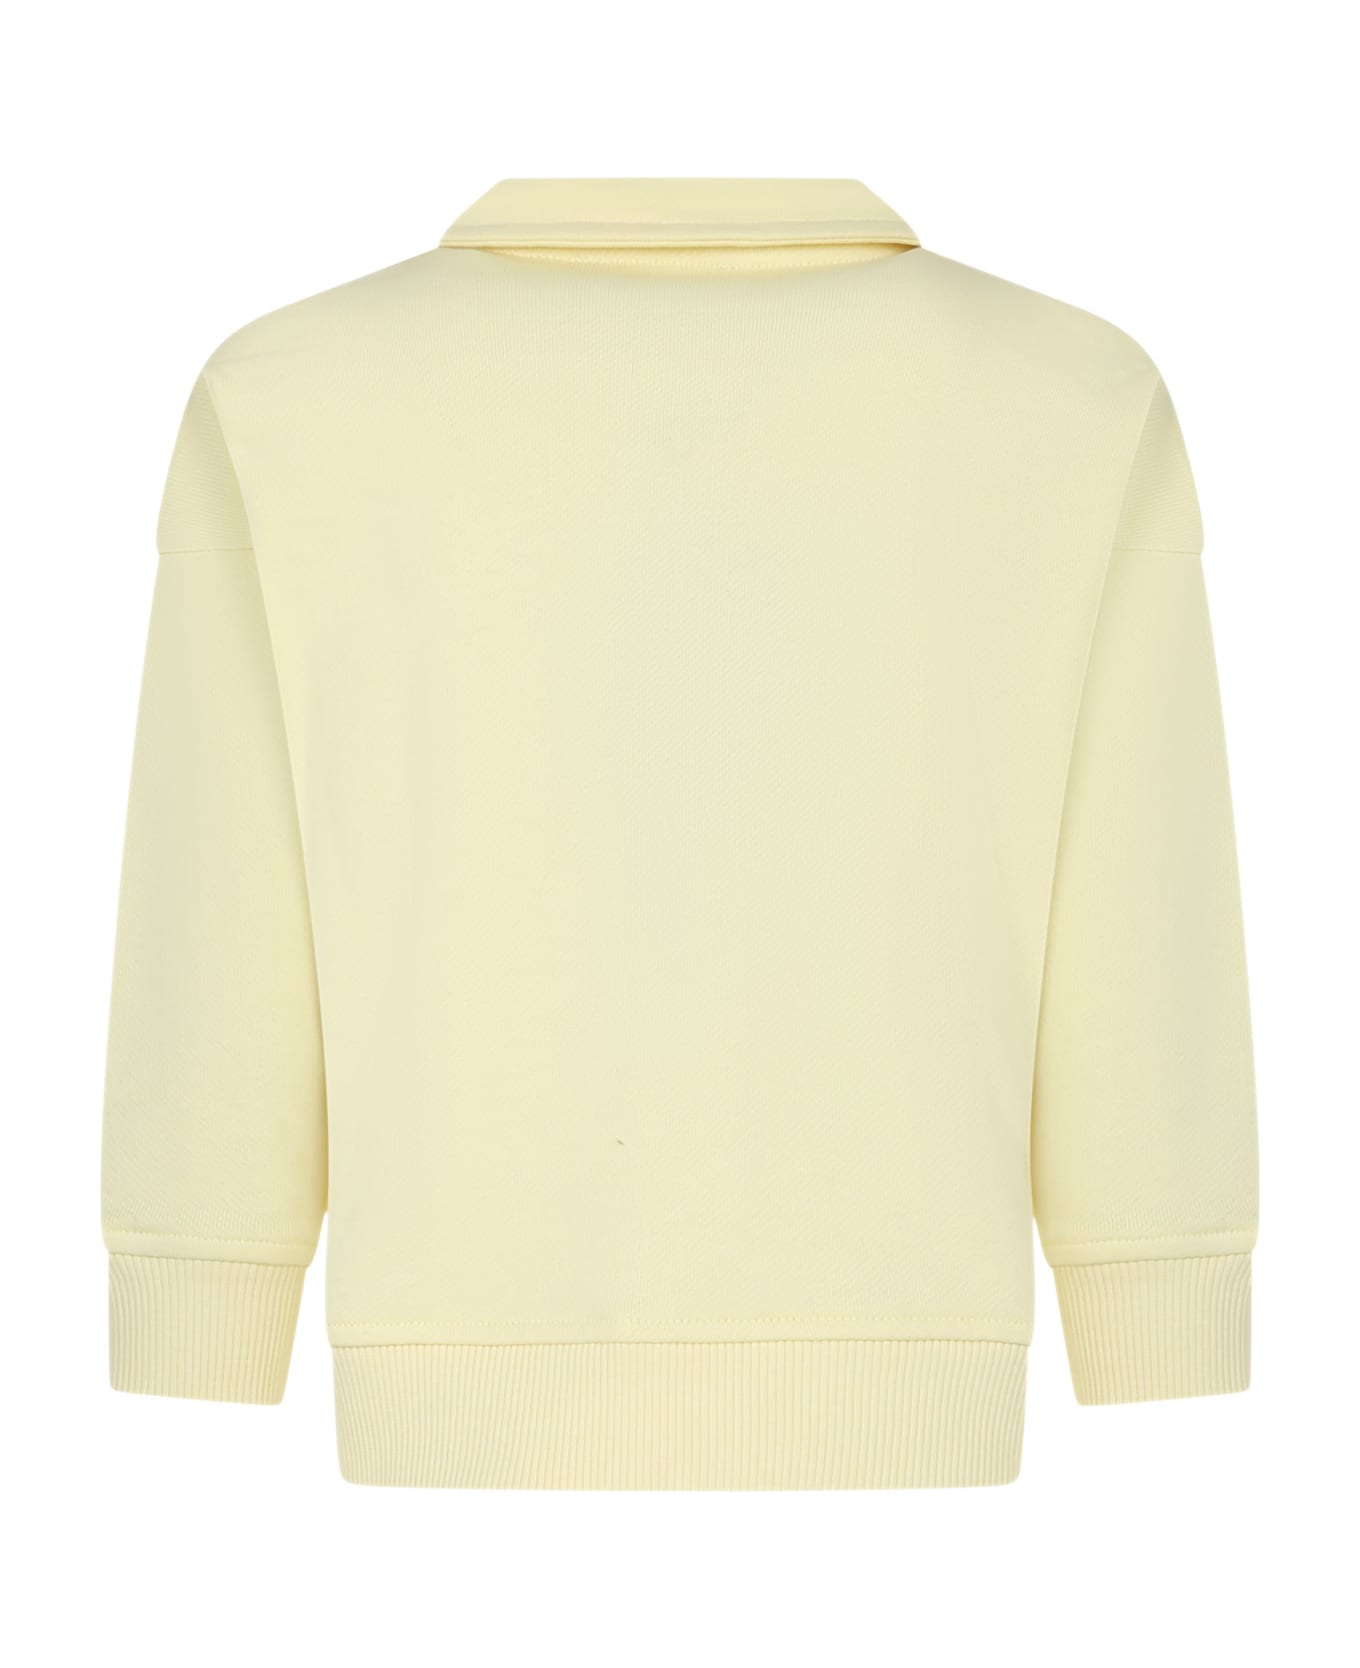 Emporio Armani Yellow Sweatshirt For Boy With The Smurfs - Yellow